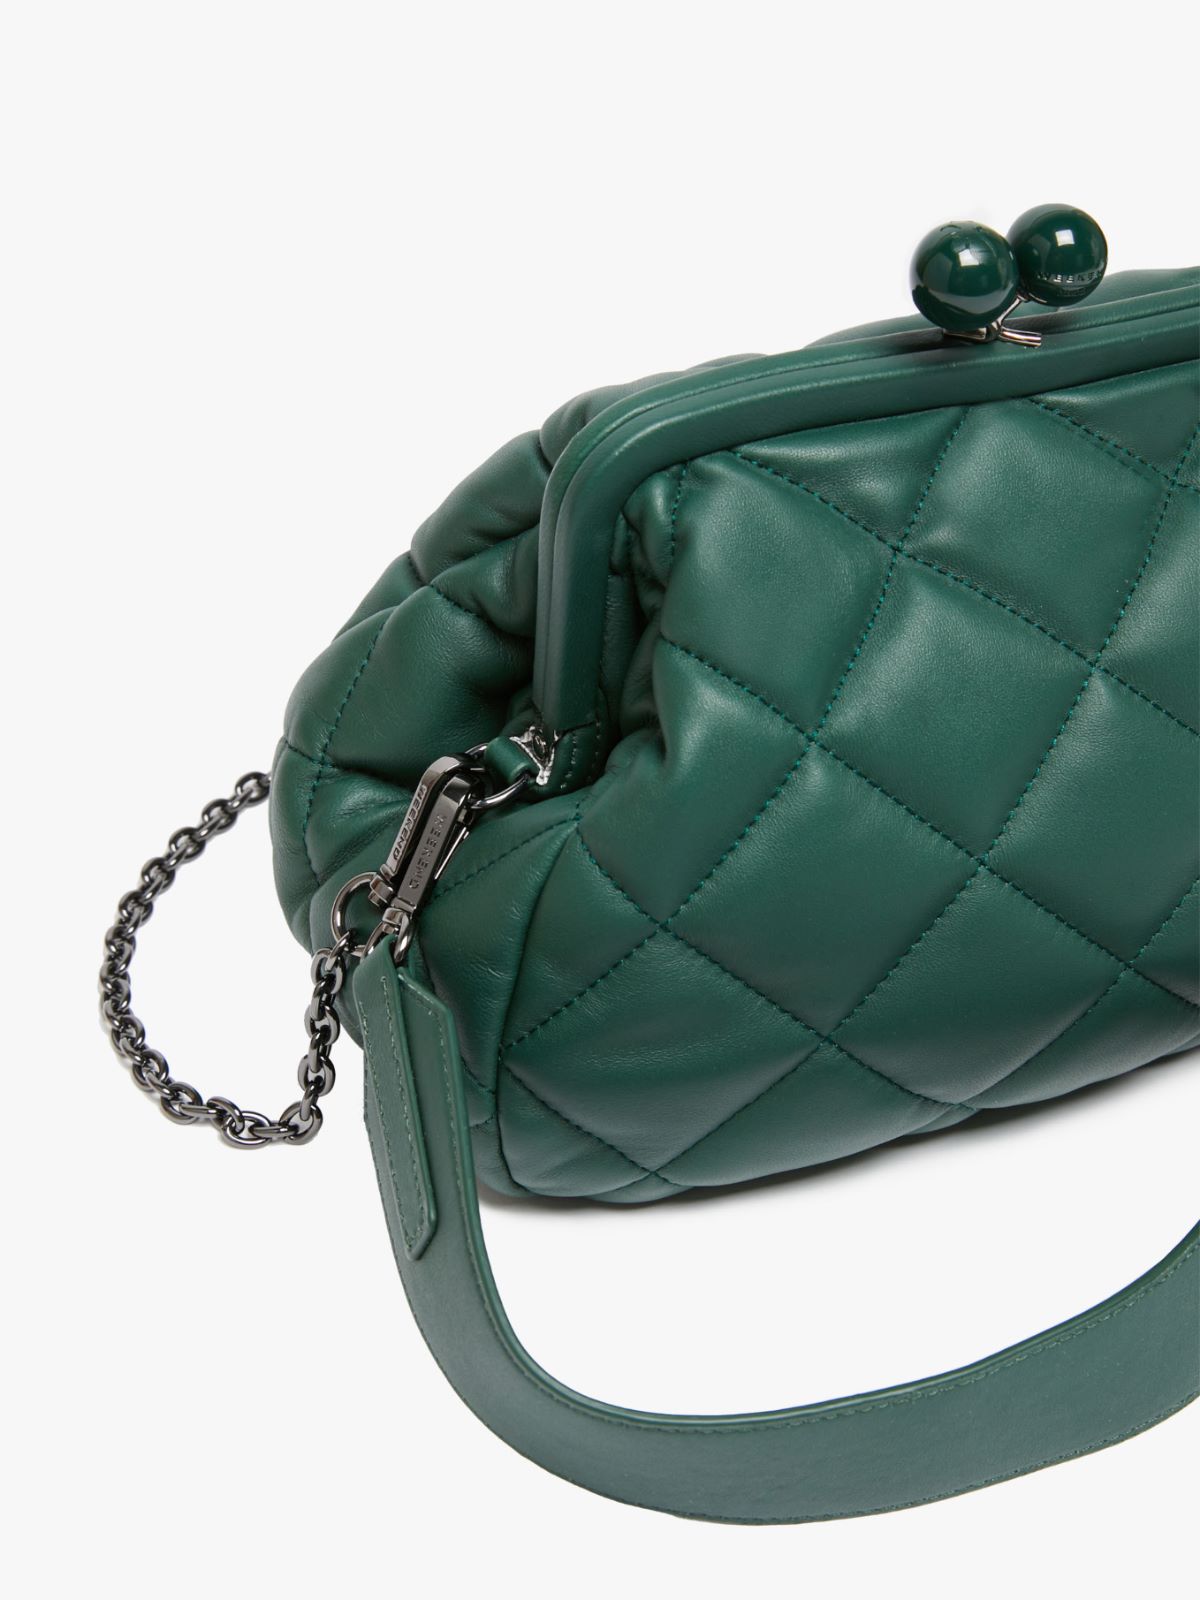 Medium Pasticcino Bag in nappa leather, dark green | Weekend Max Mara